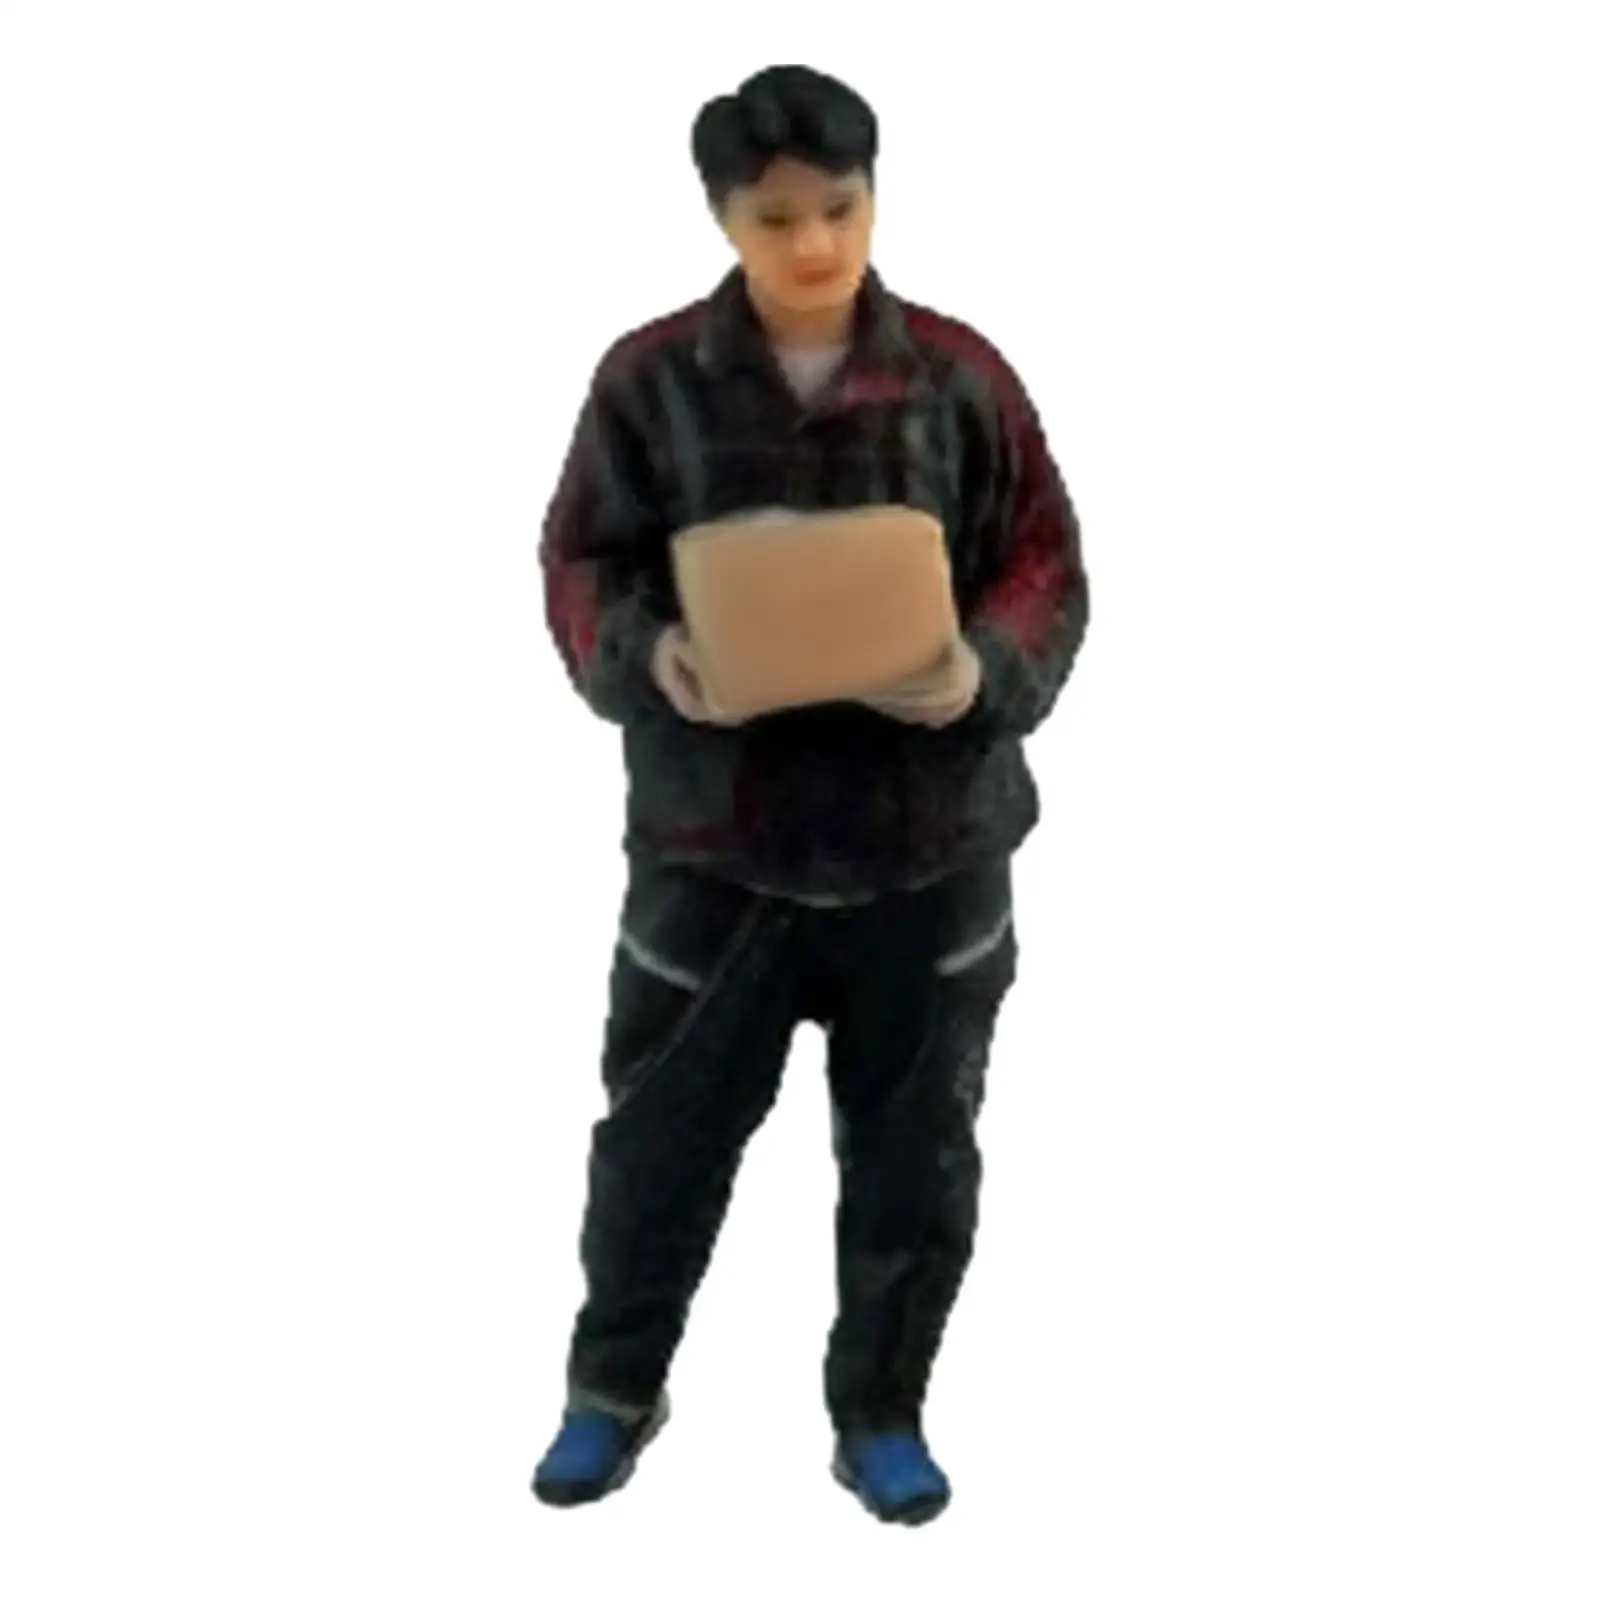 Delivery Man 1:64 Realistic Diorama Character Figure Handmade Tiny People Model for Diorama Miniature Scene Decor